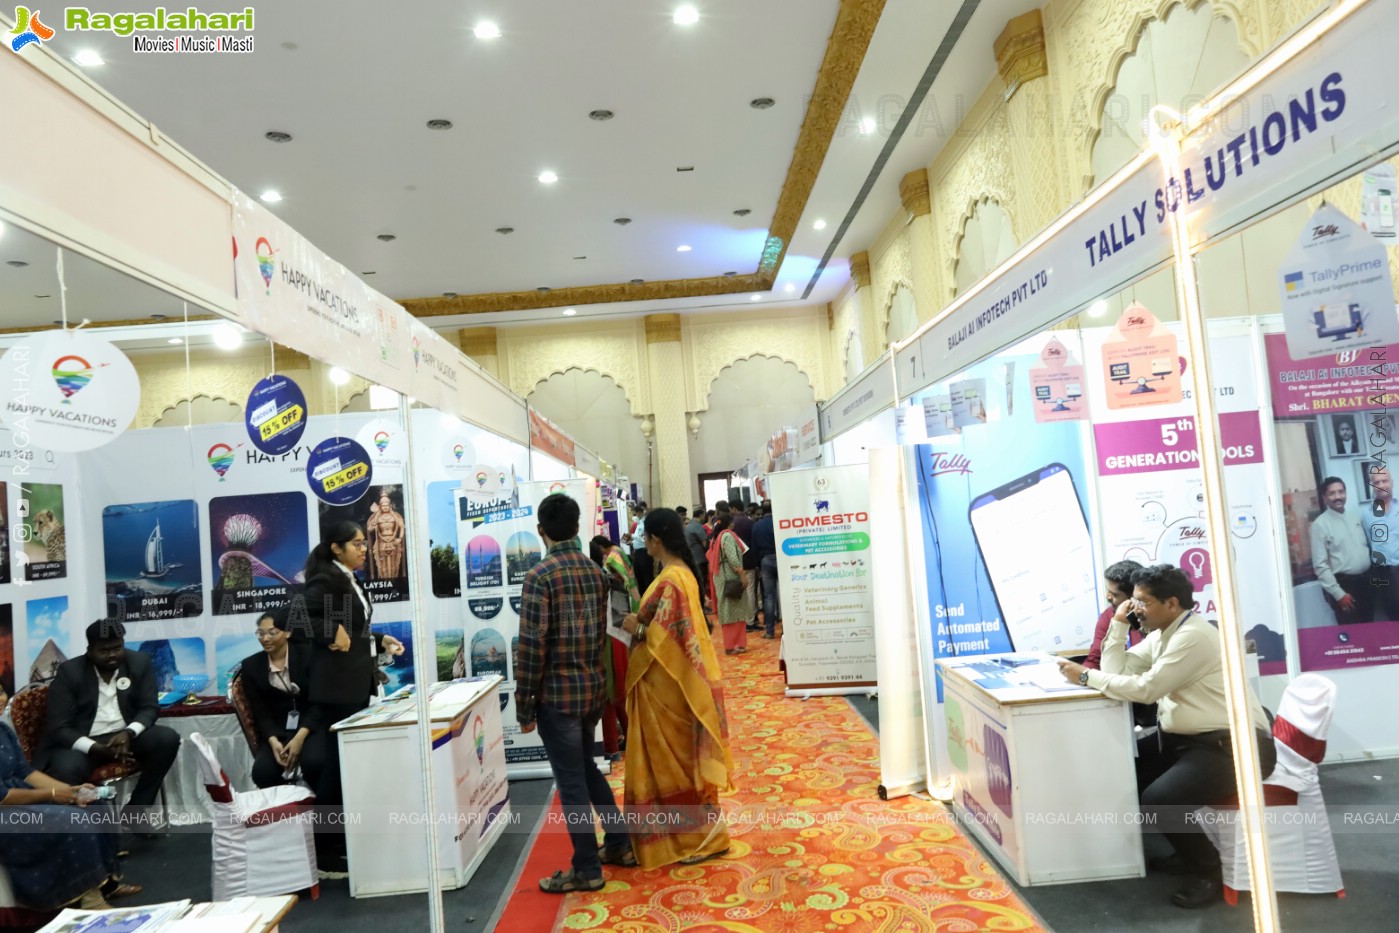 We Expo Event at Gadiraju Palace, Vizag